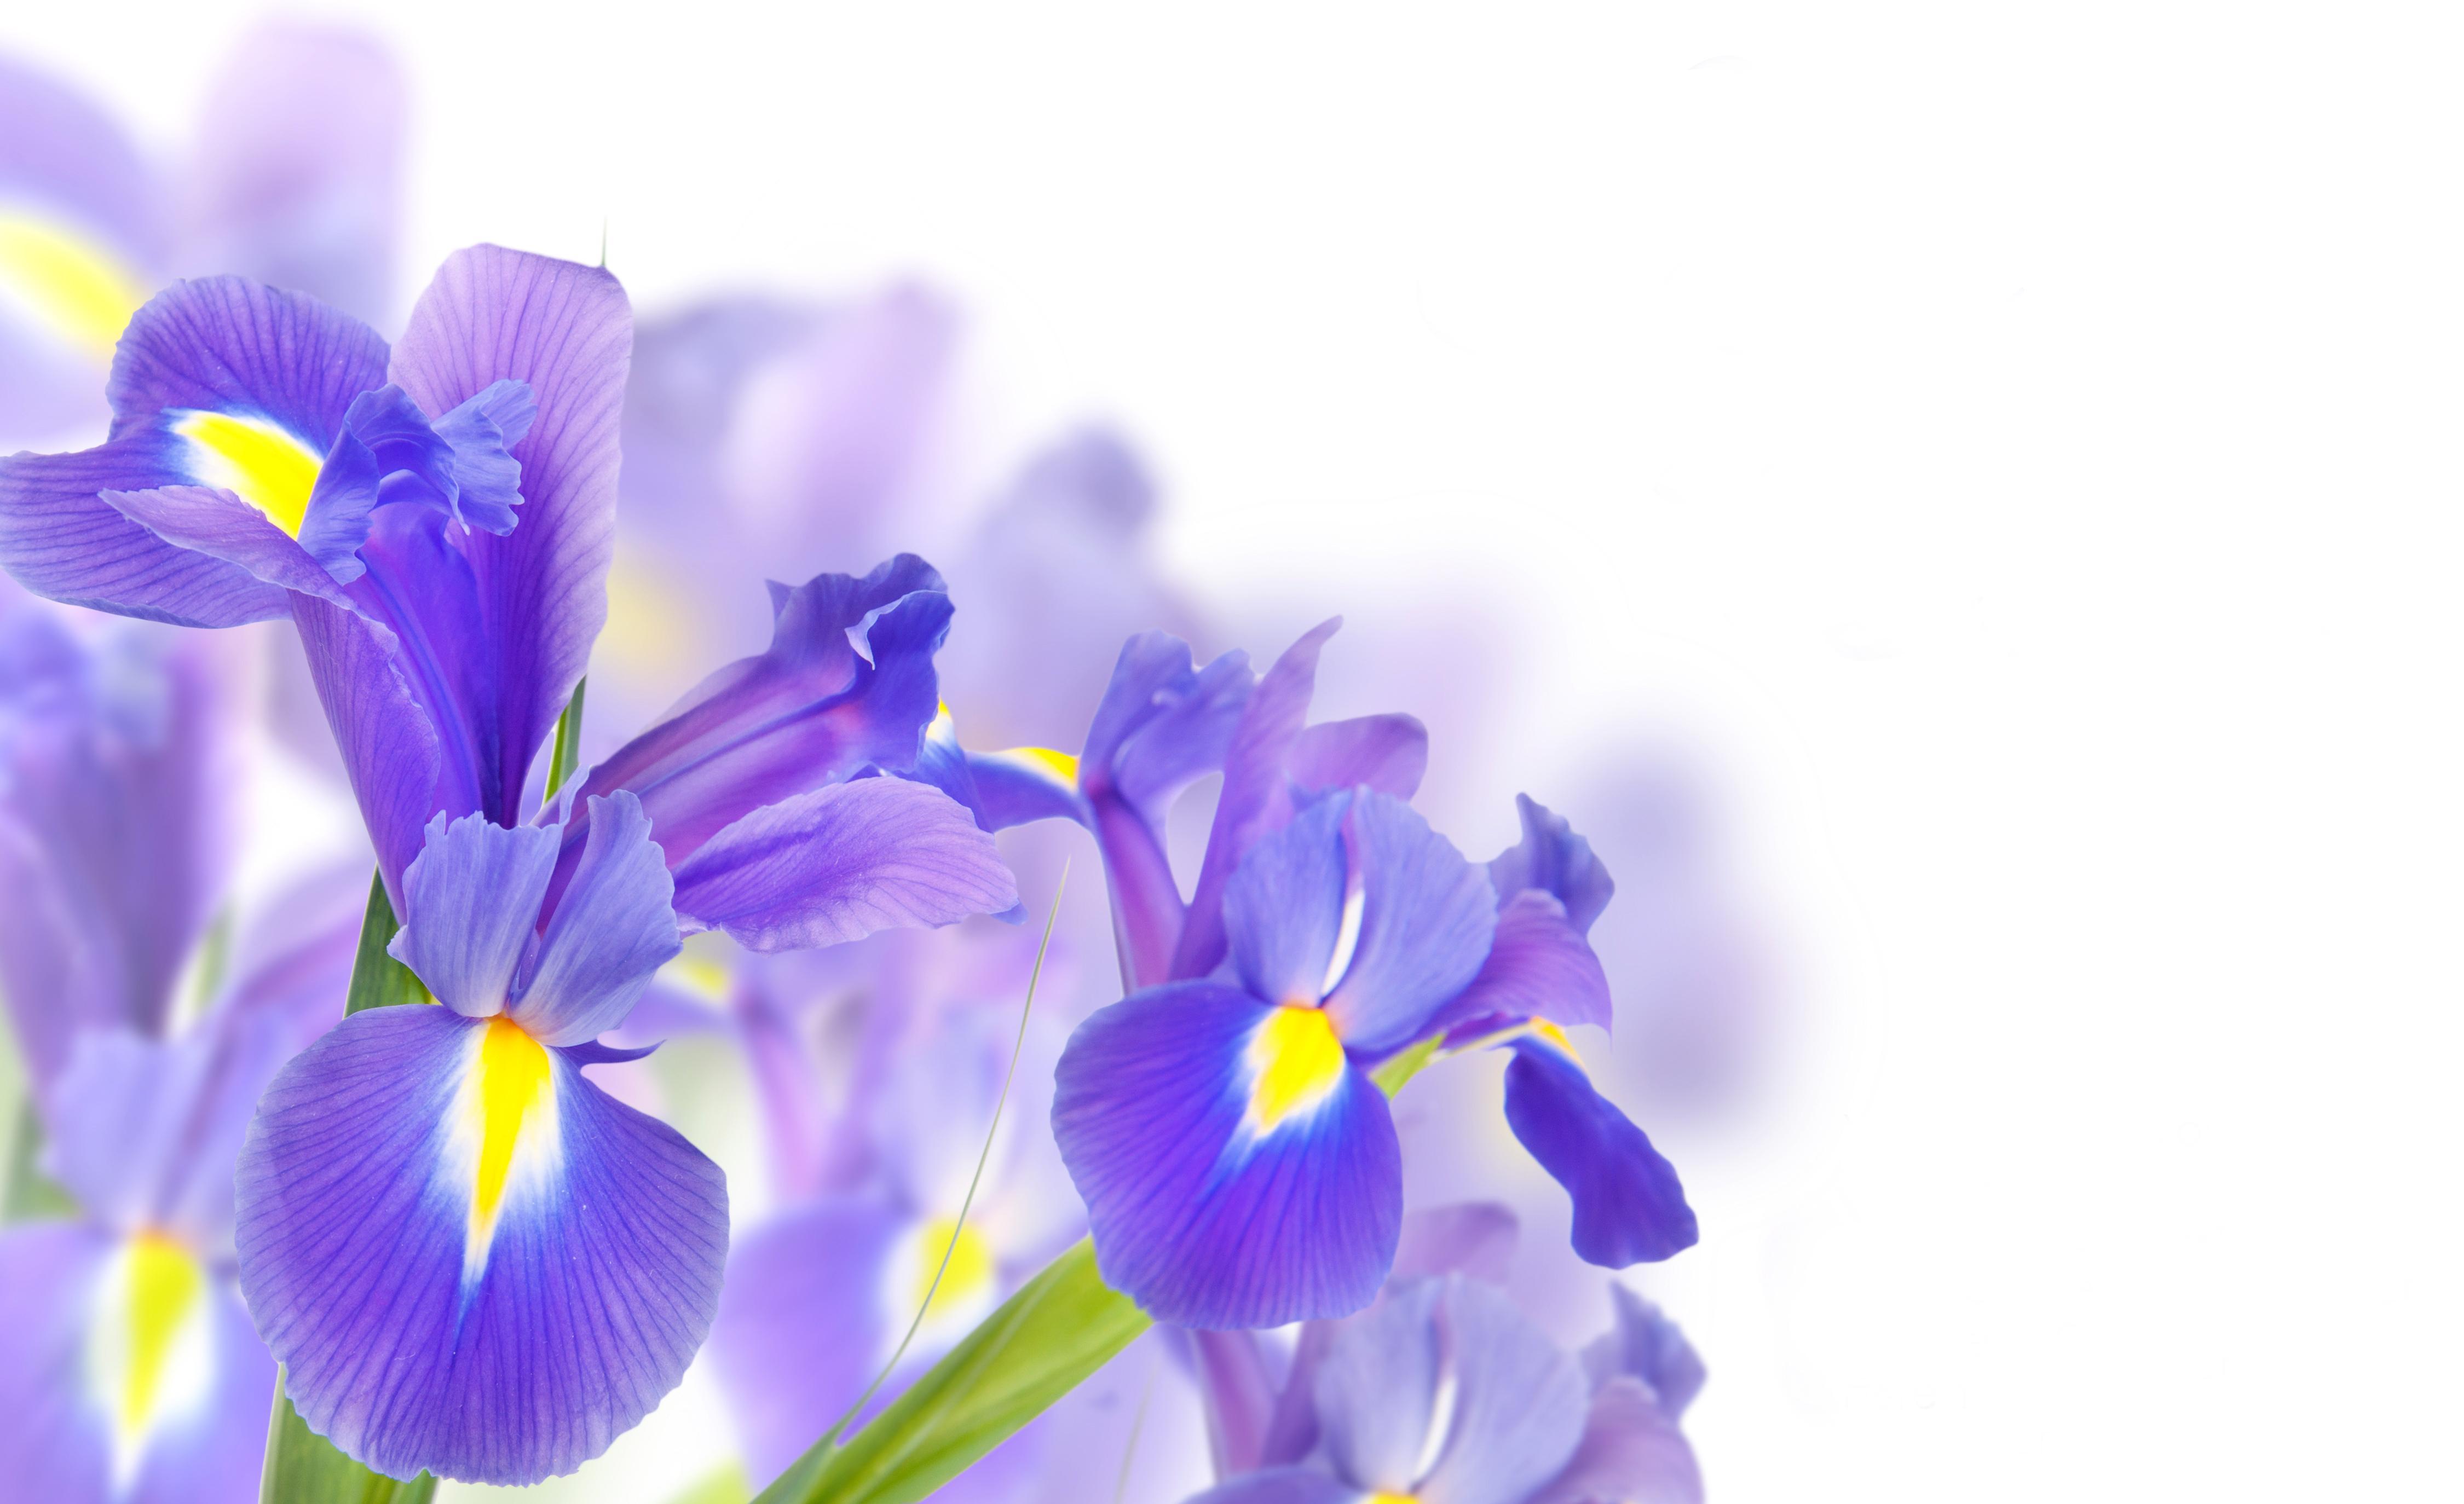 Irises Background. Van Gogh Irises